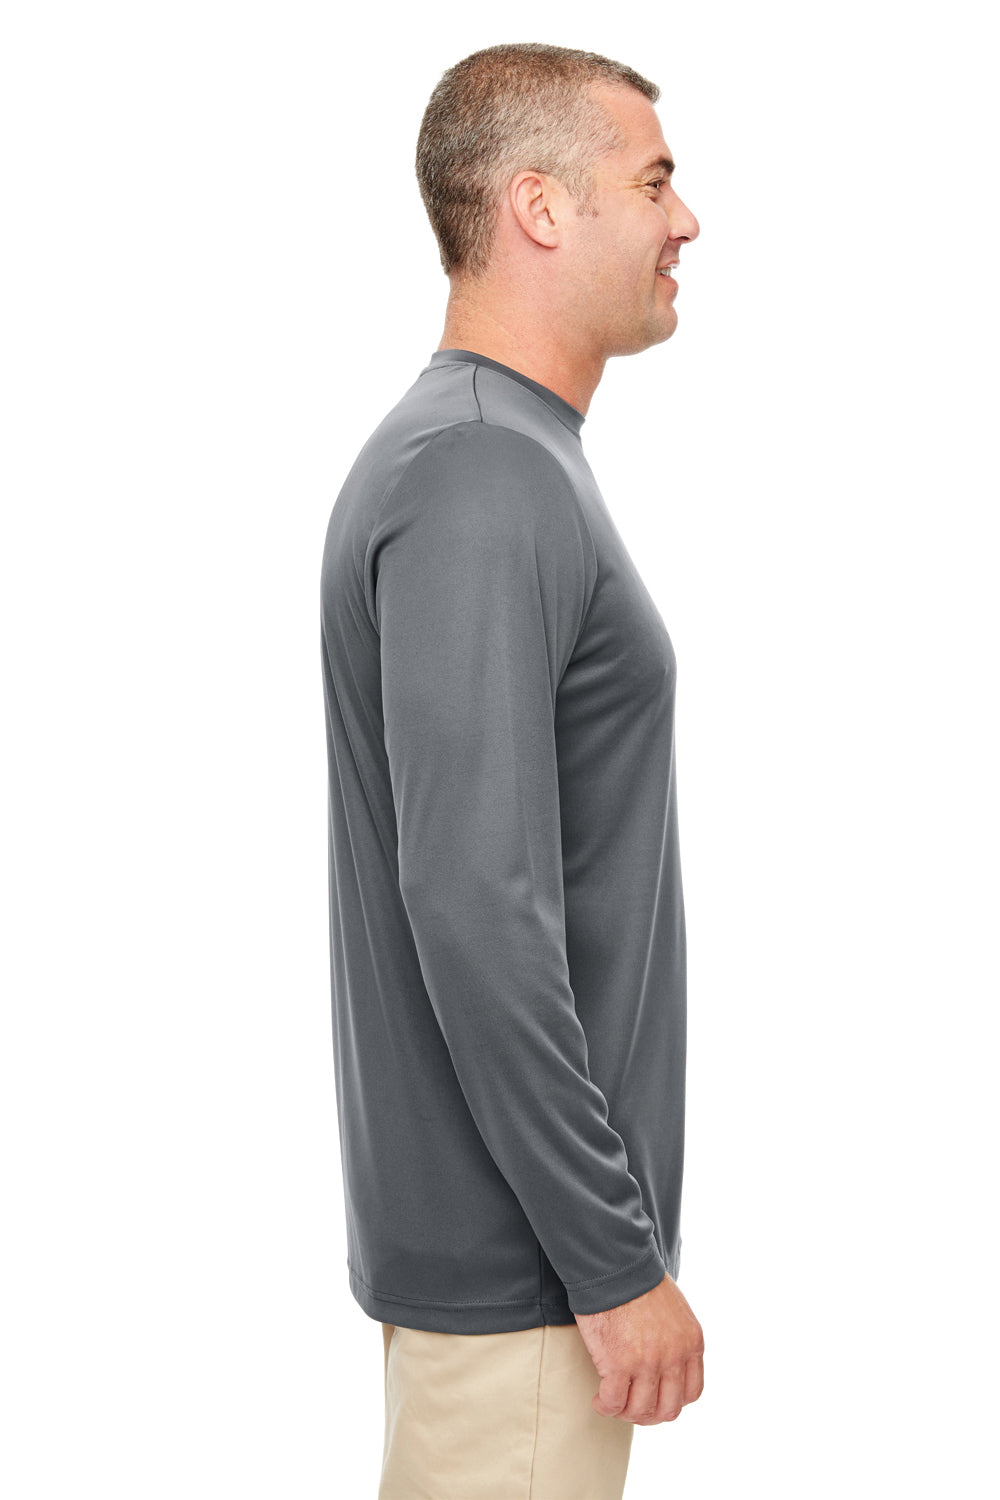 UltraClub 8622 Mens Cool & Dry Performance Moisture Wicking Long Sleeve Crewneck T-Shirt Charcoal Grey Side